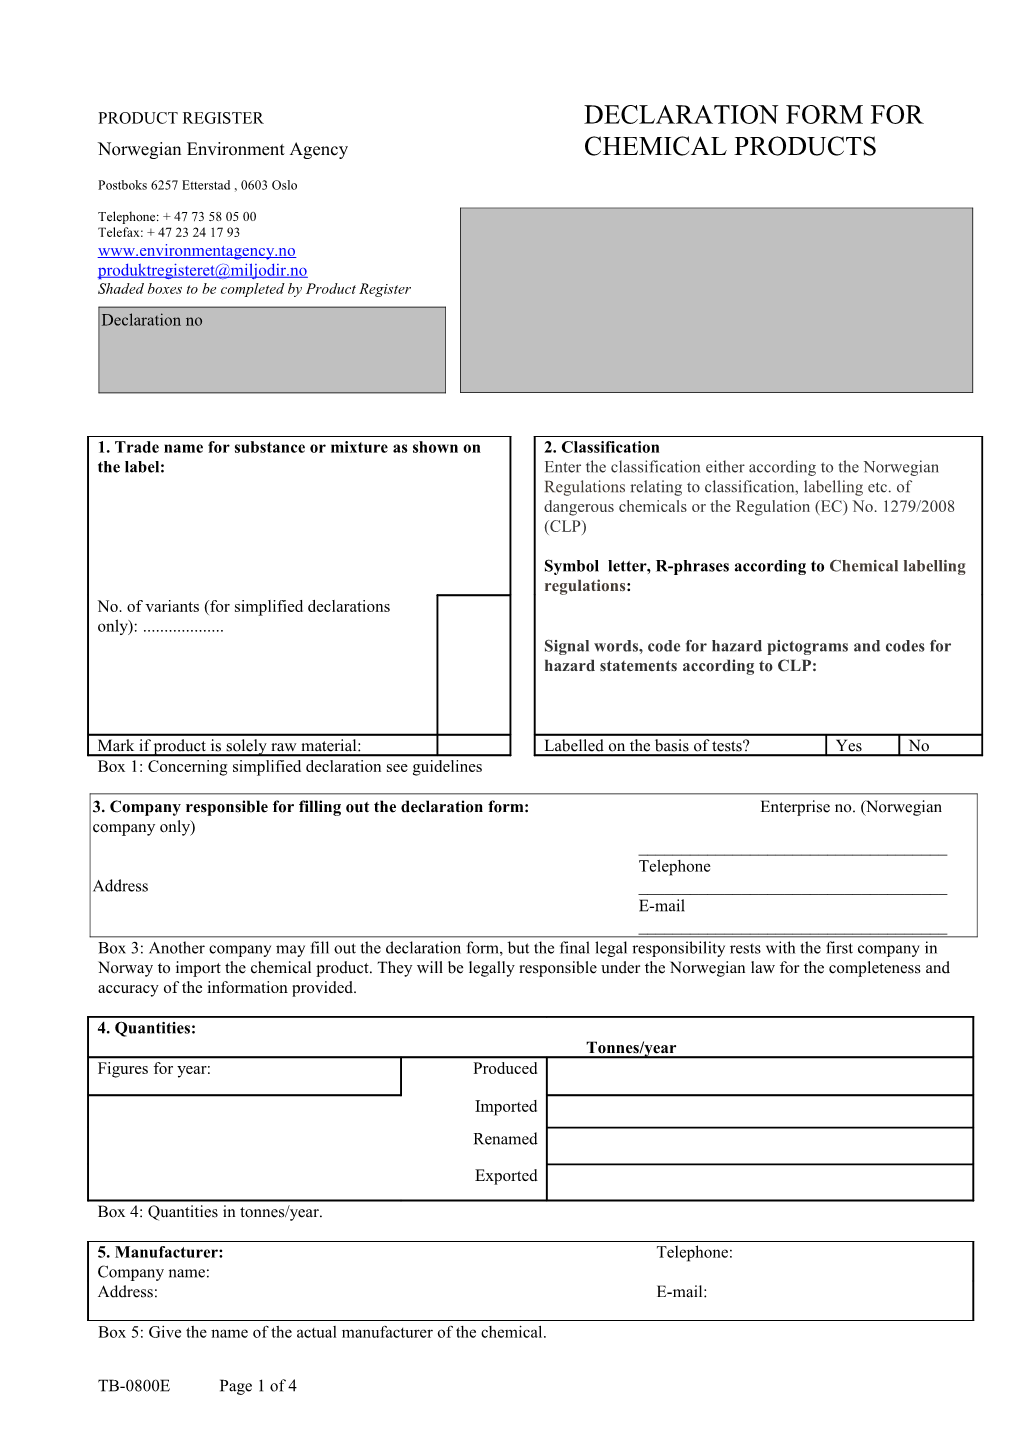 Product Registerdeclaration Form For